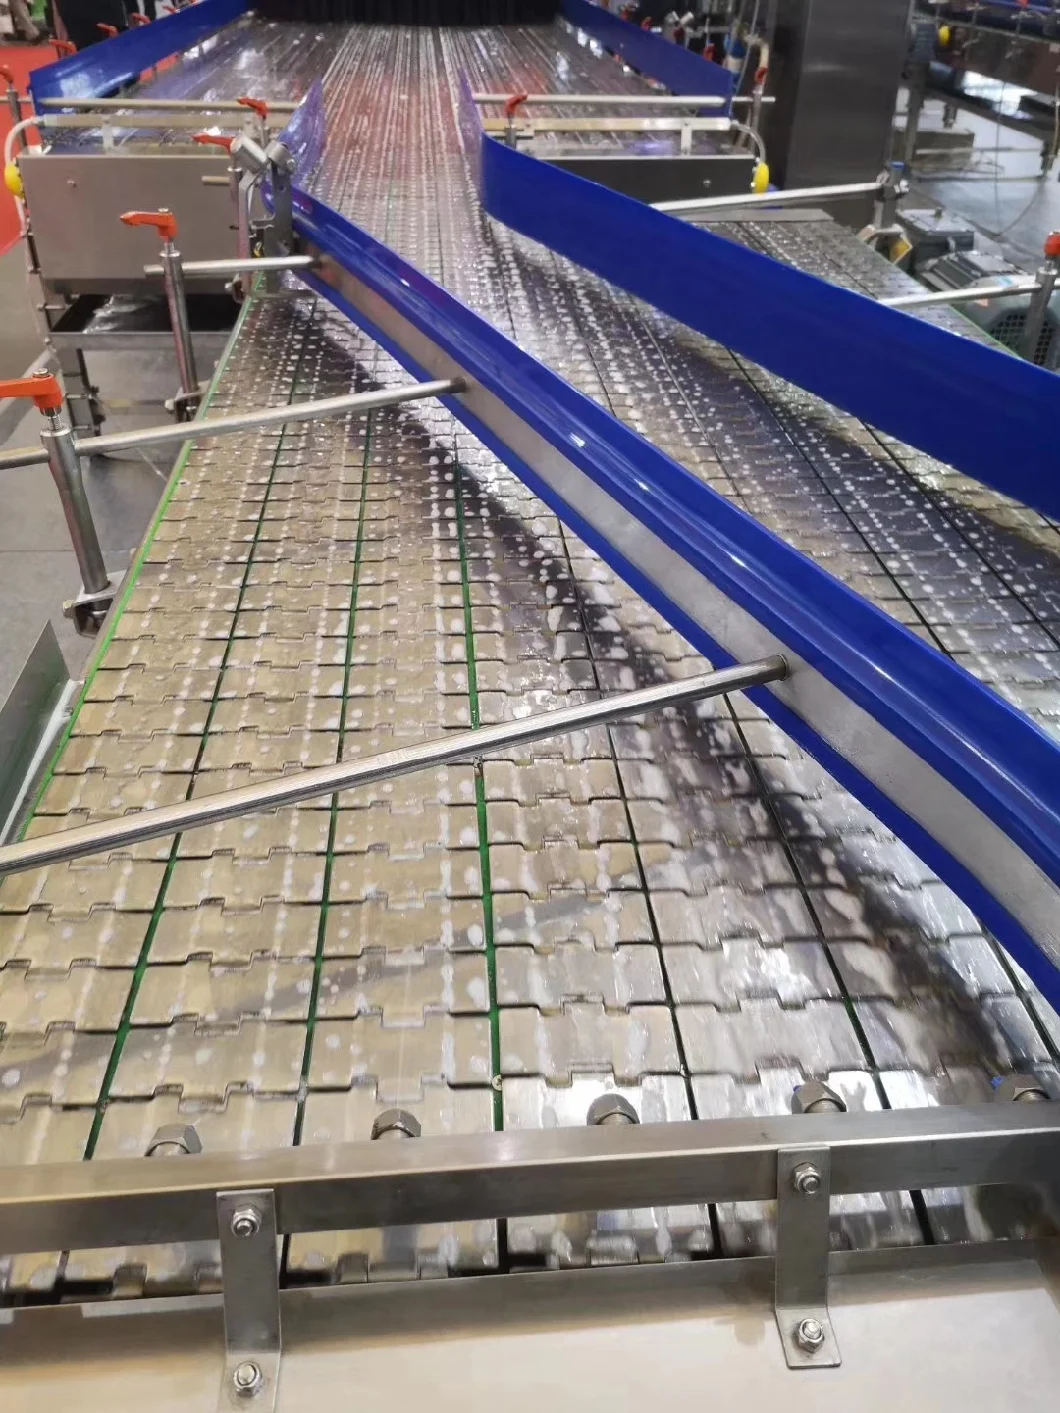 Stainless Steel Conveyor Chain Flat Top Chain Conveyor for Bottle Produce Line